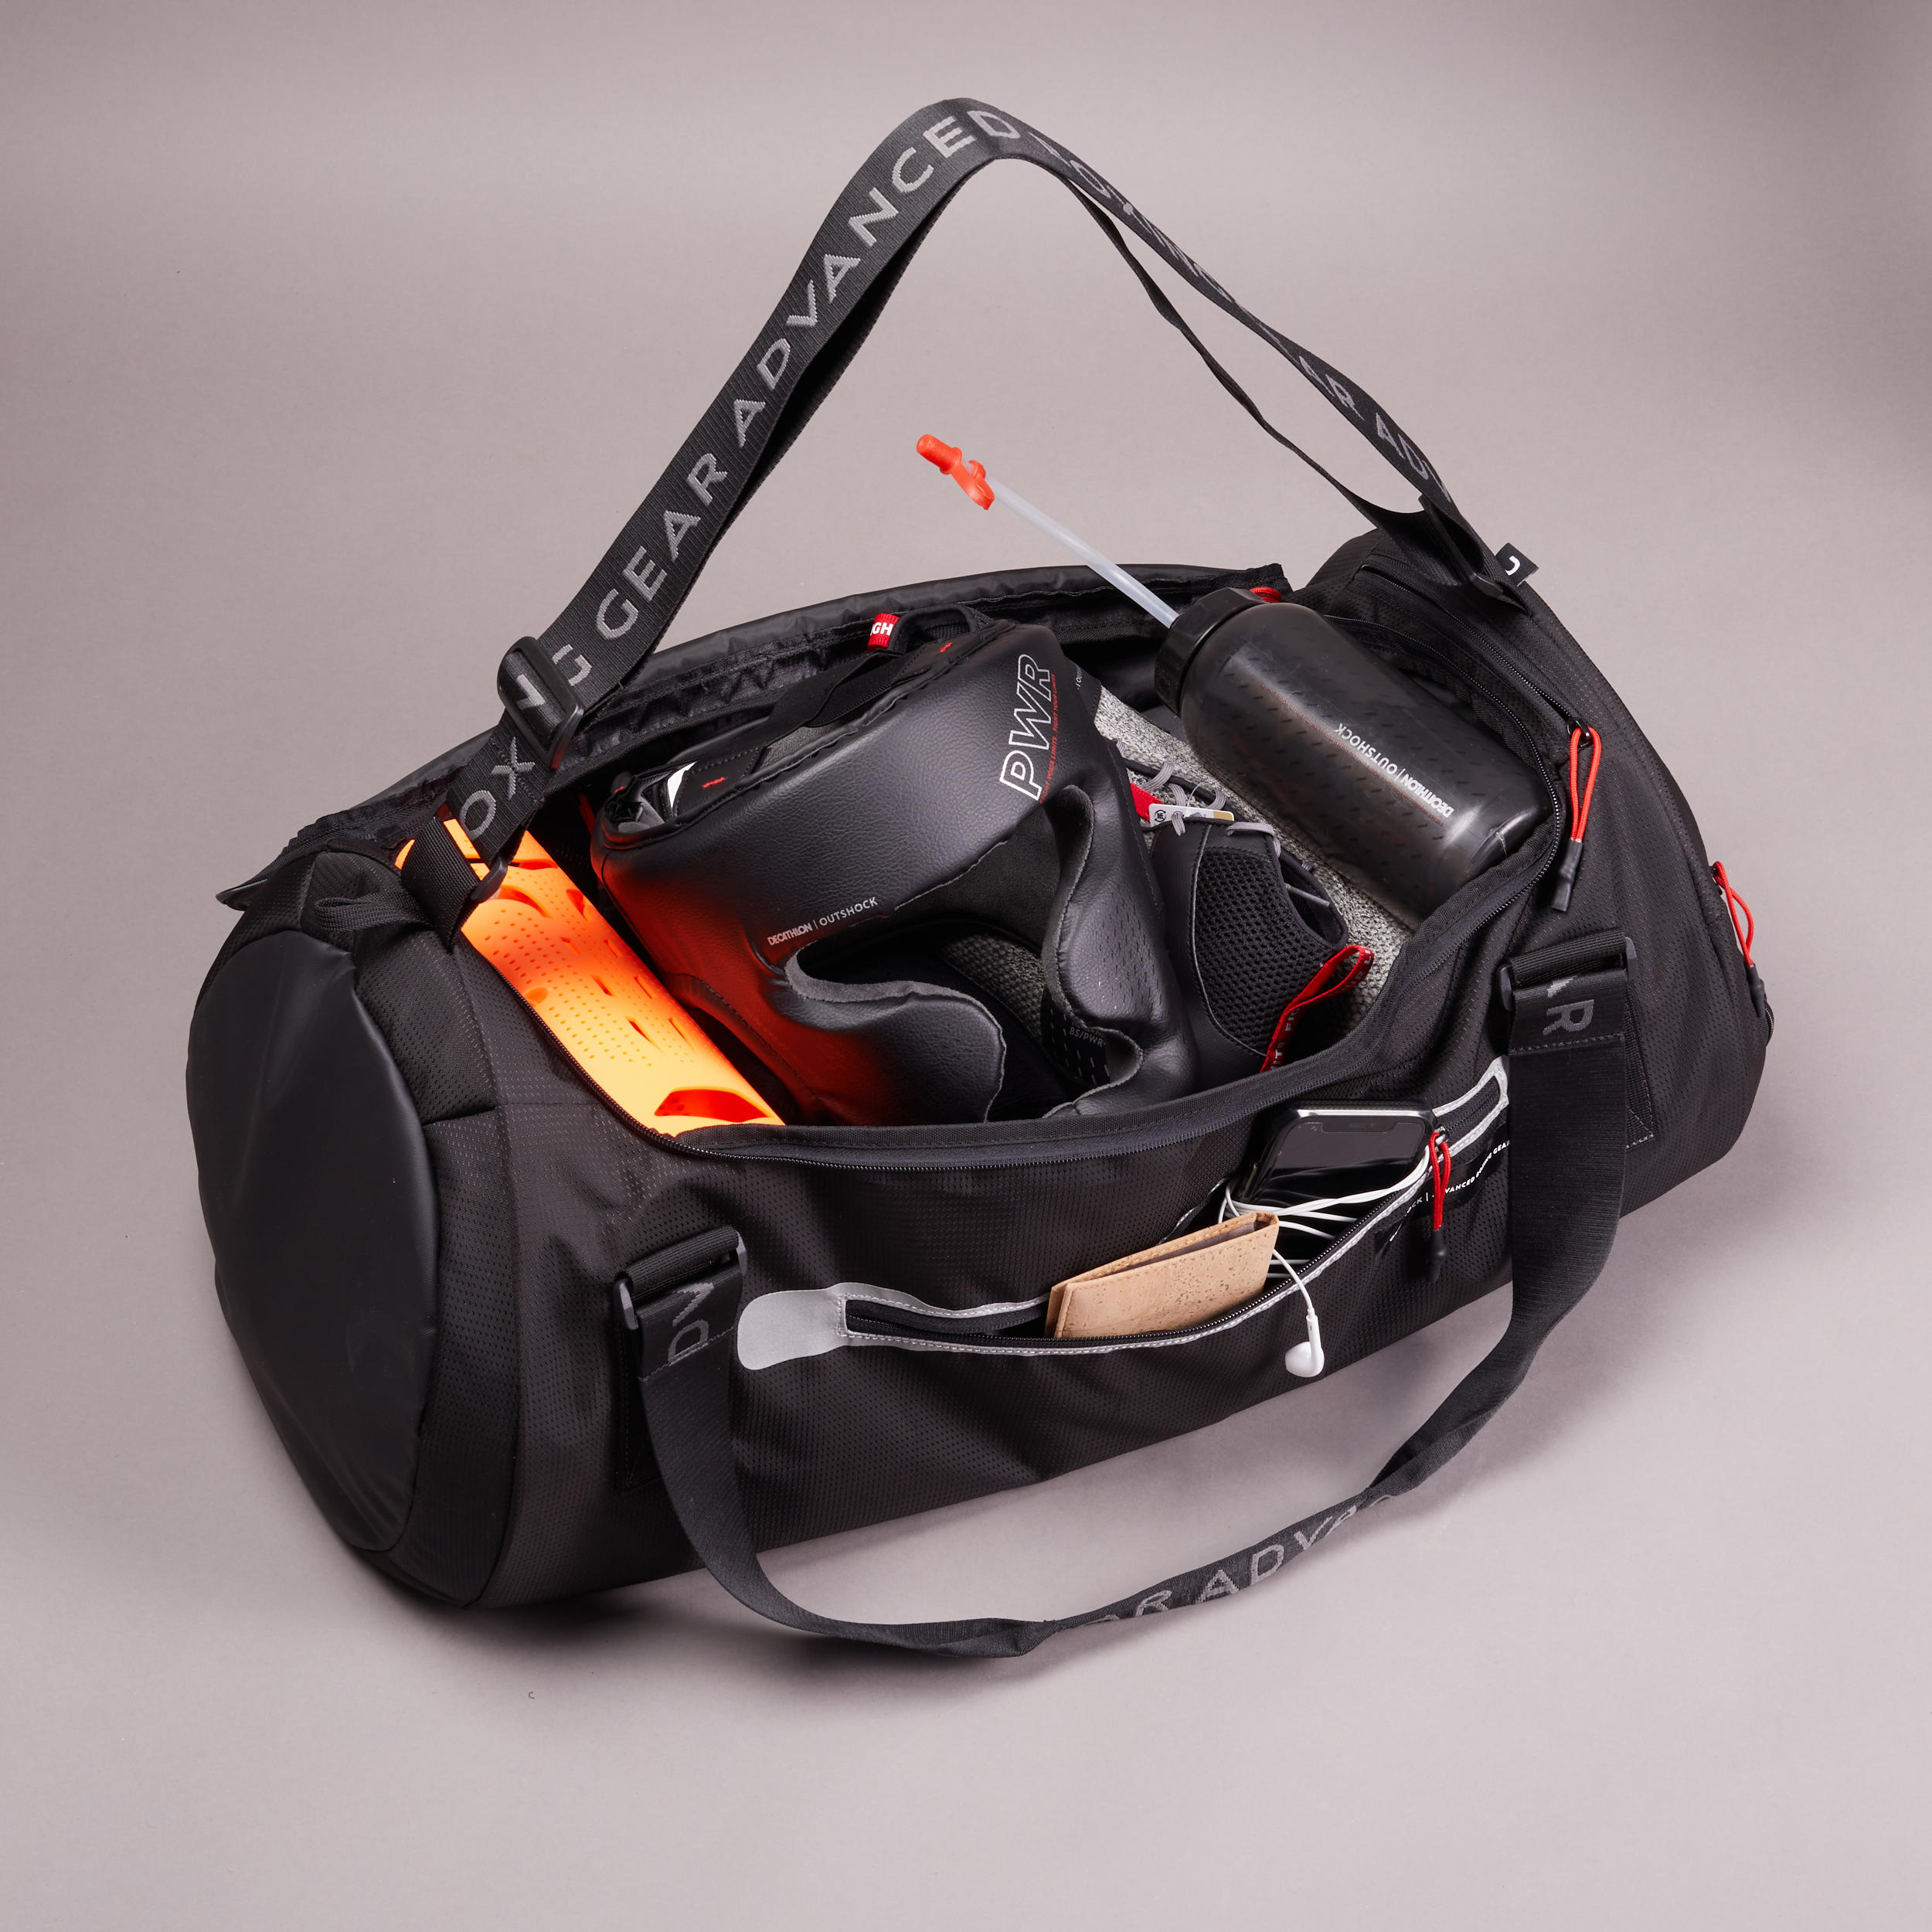 Waterproof duffle bag - travel bag 60 L black TRIBORD | Decathlon